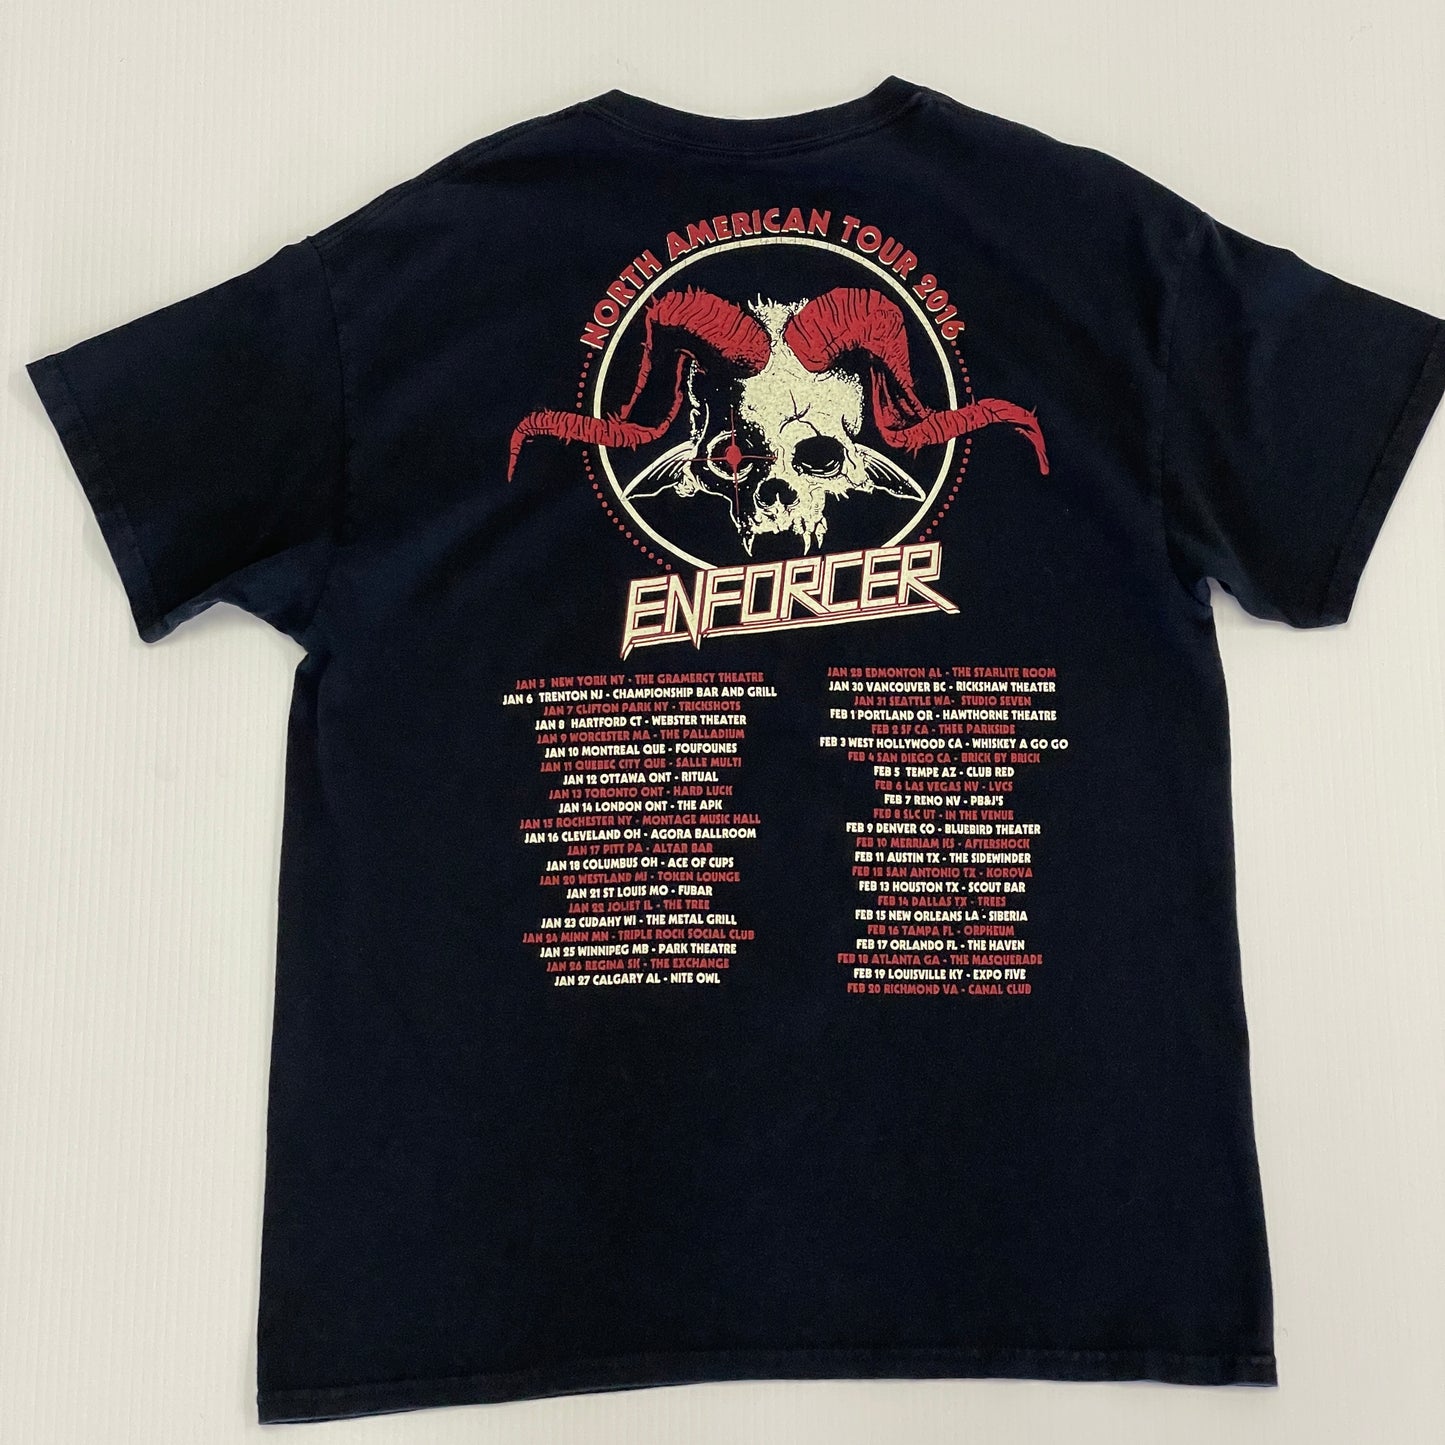 Enforcer - North American Tour 2016 T-shirt size Large